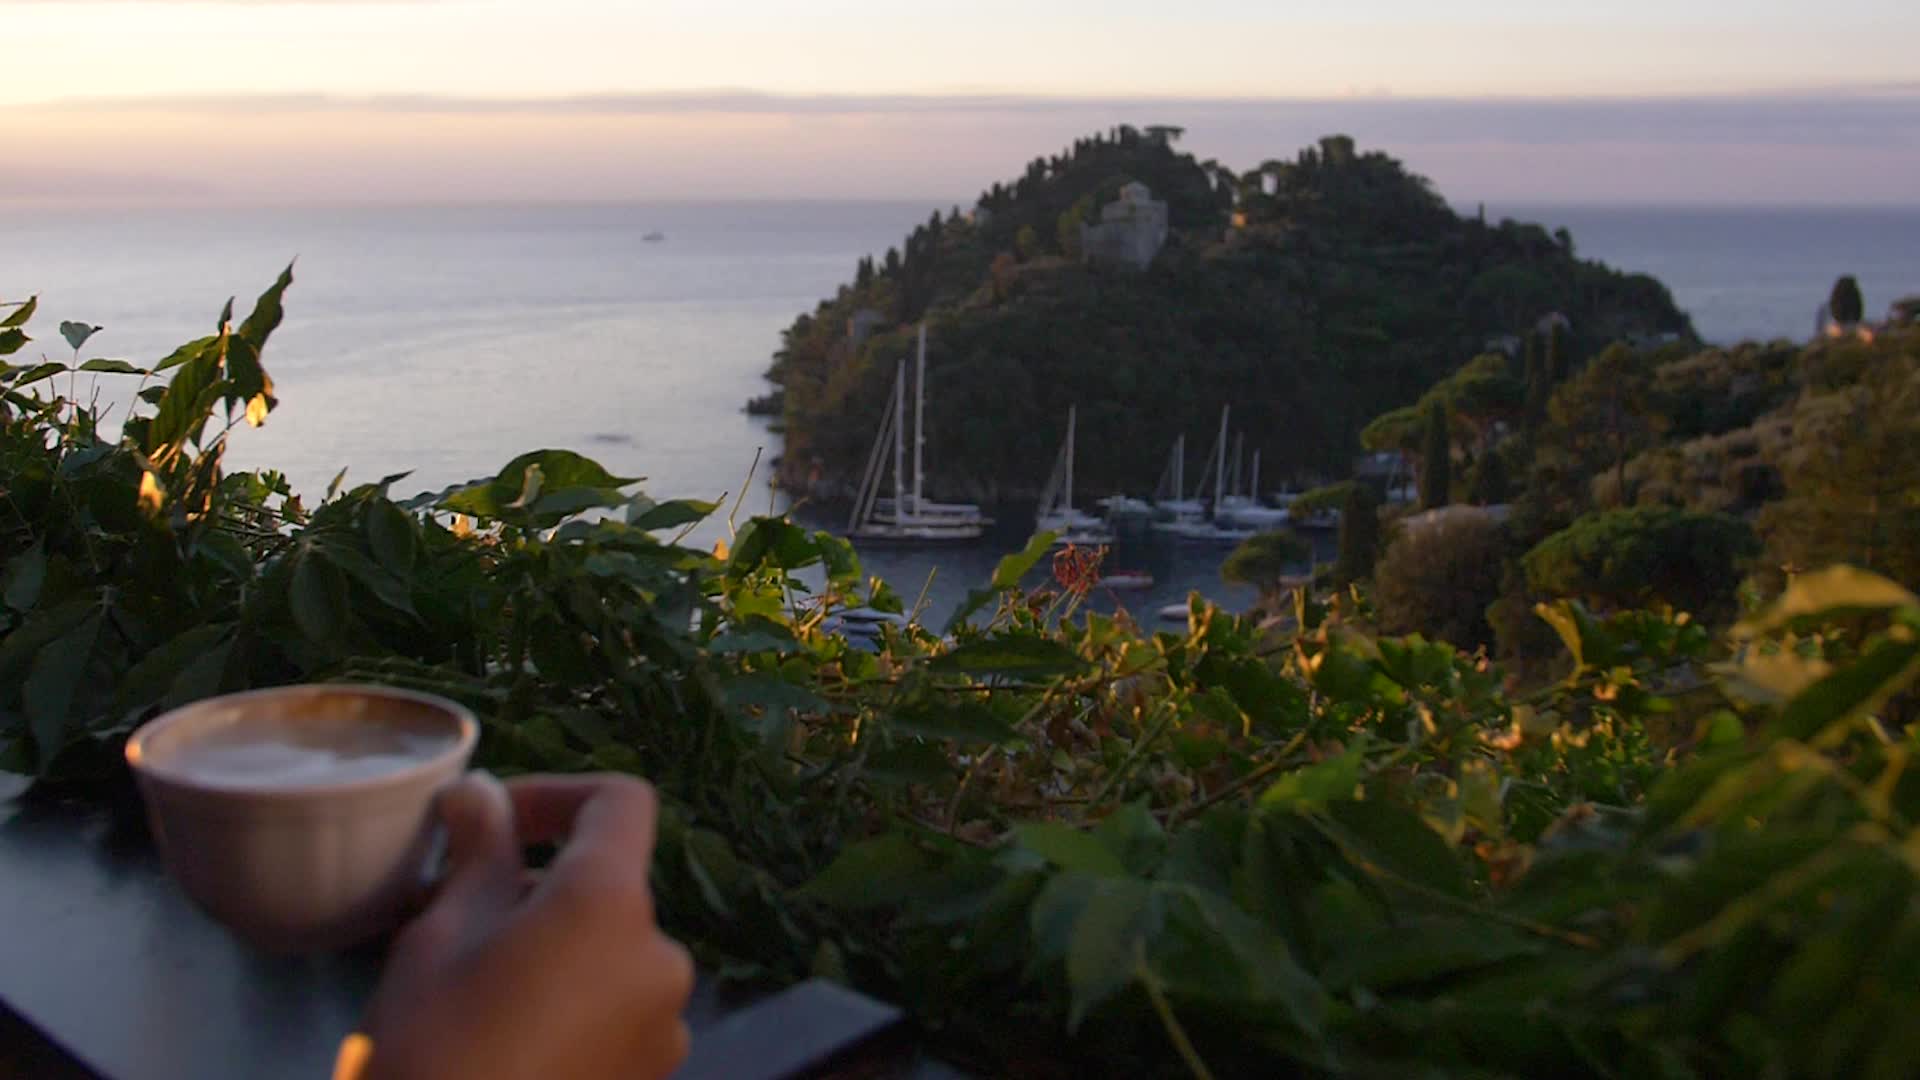 Luxury Travel. on Instagram: “Belmond Hotel Splendido #Portofino 🌺🇮🇹  #belmondpostcards”